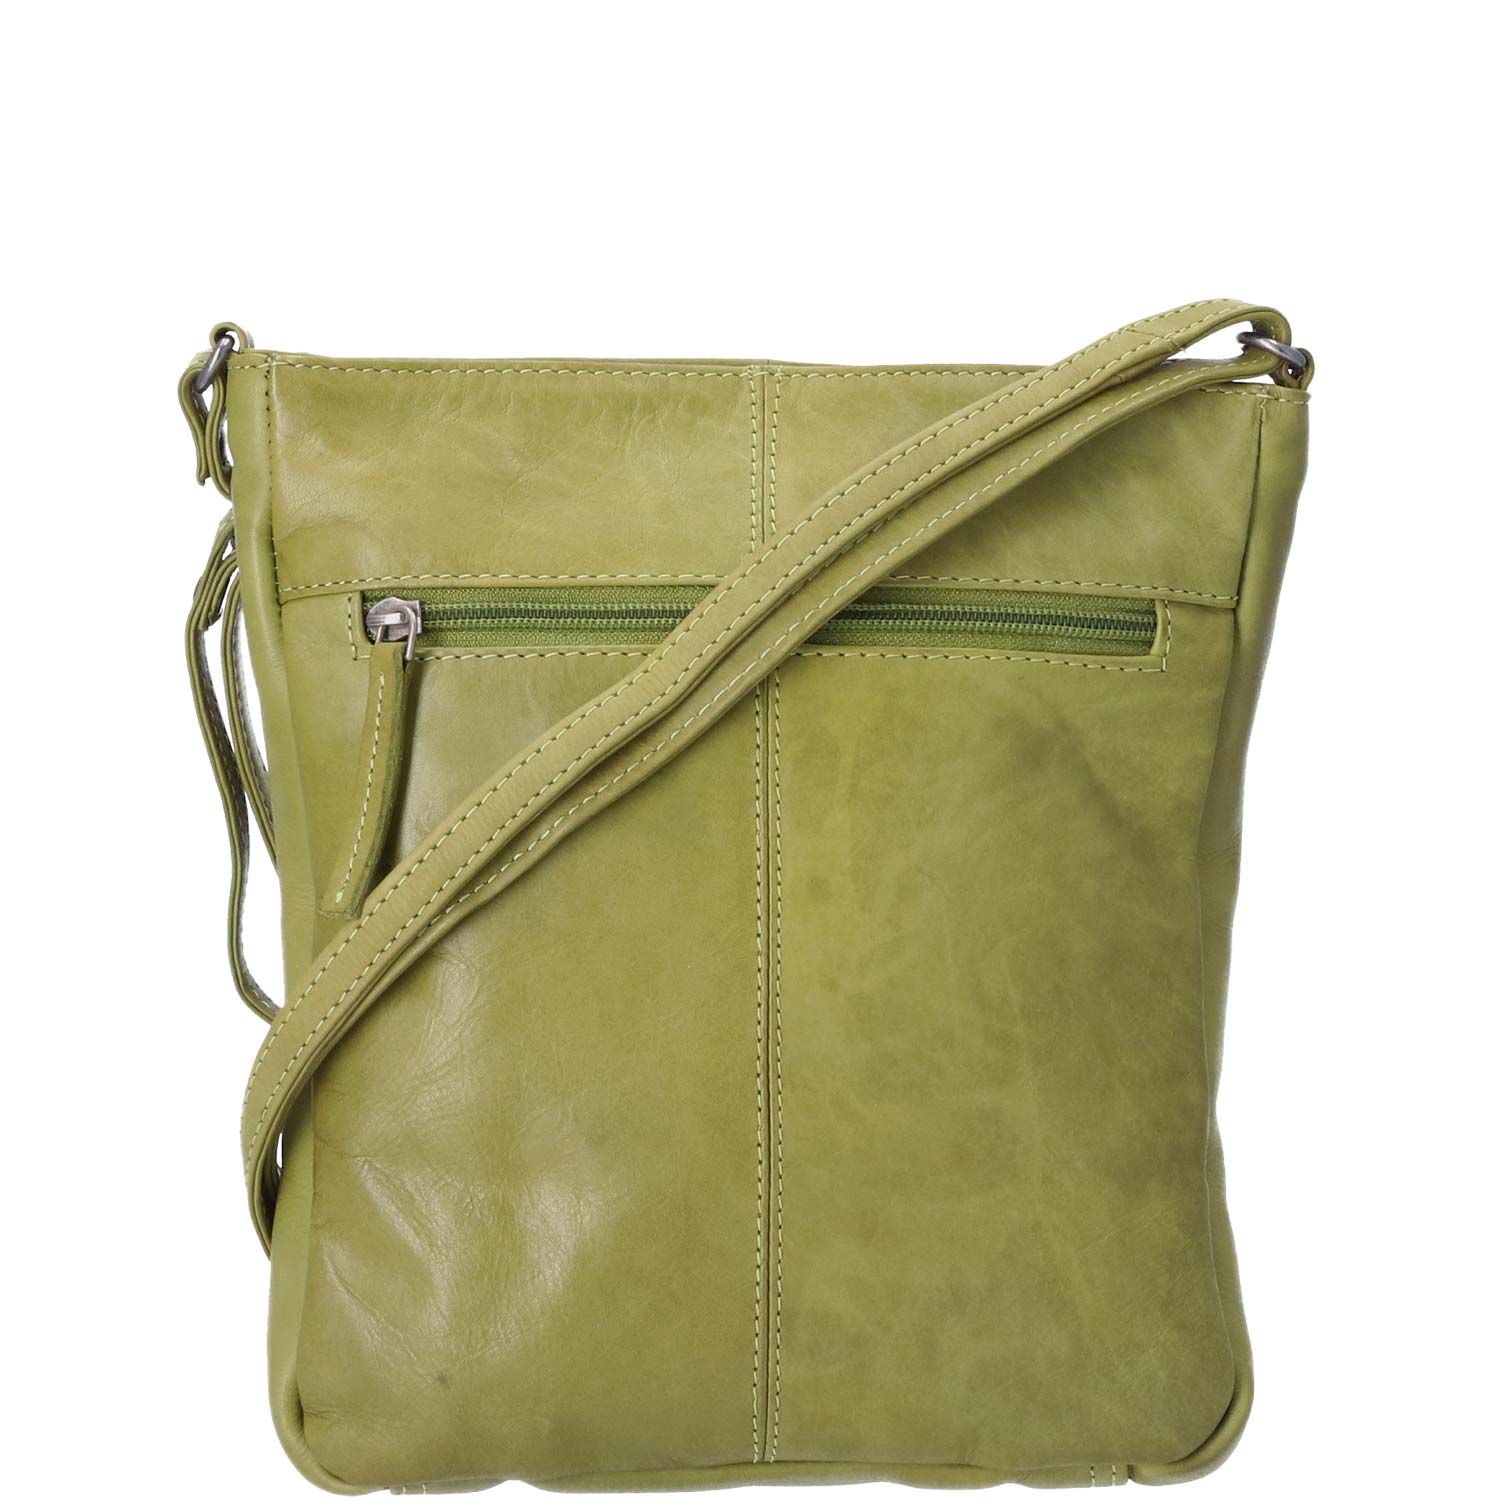 The Skandinavian Brand Lady Bag Washed Nappa grün